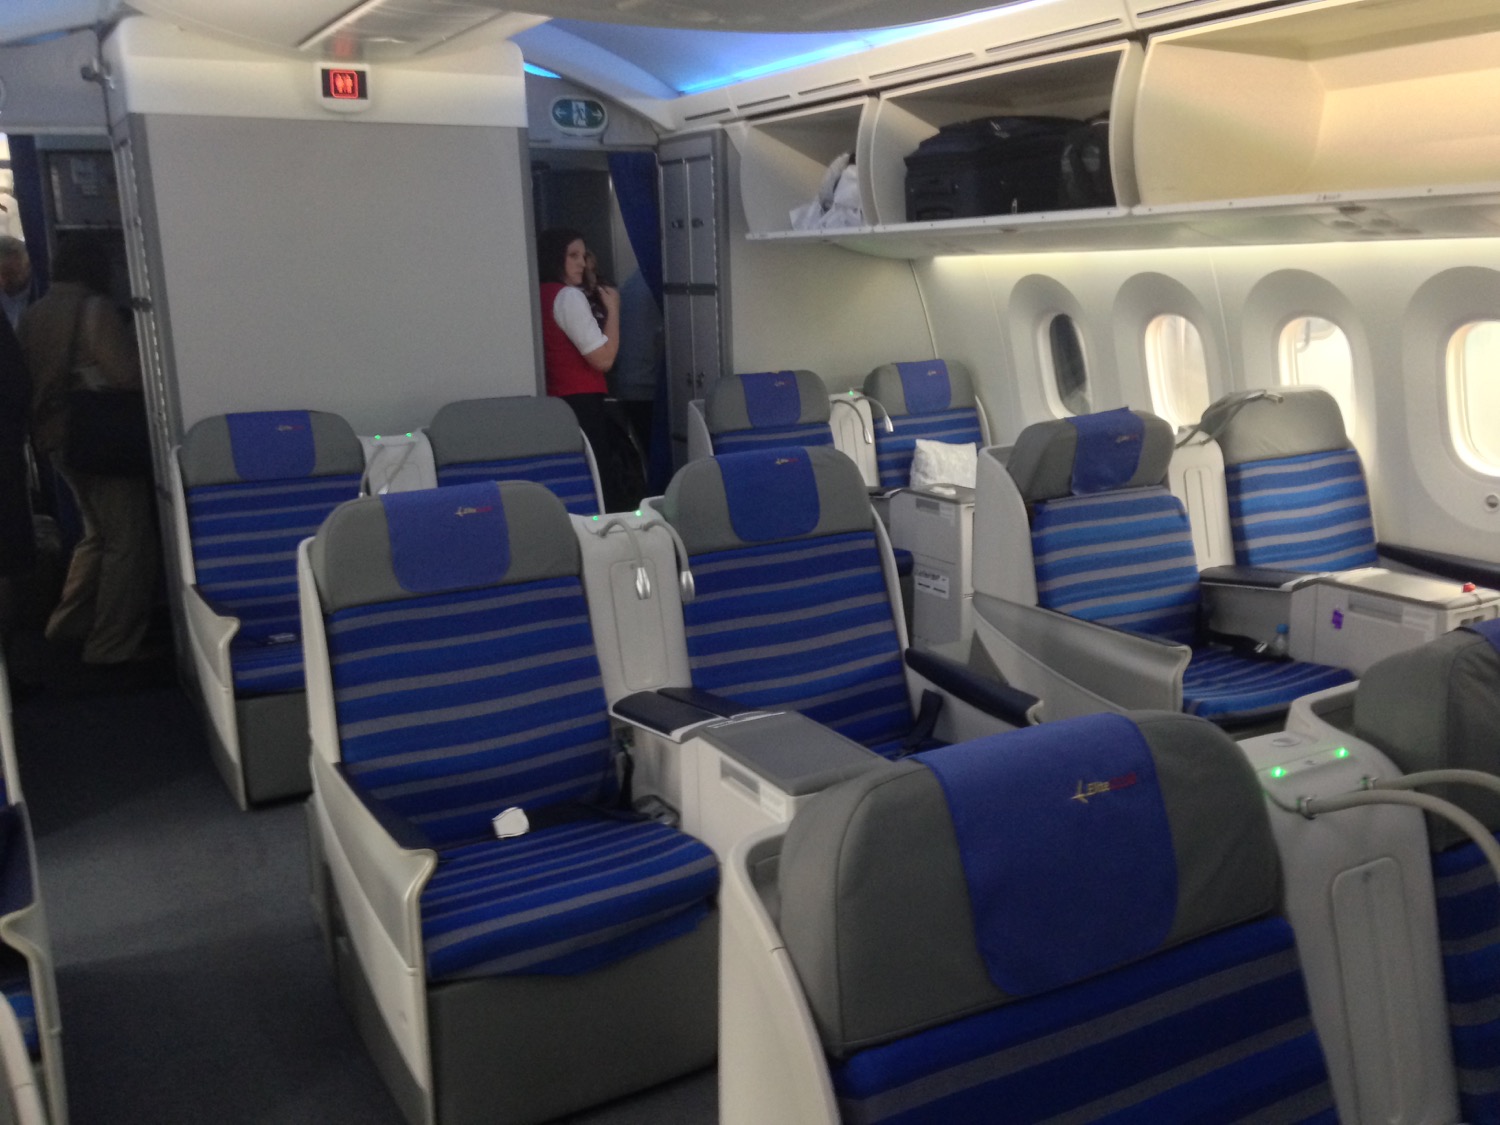 LOT Polish 787 Business Class Review - 35